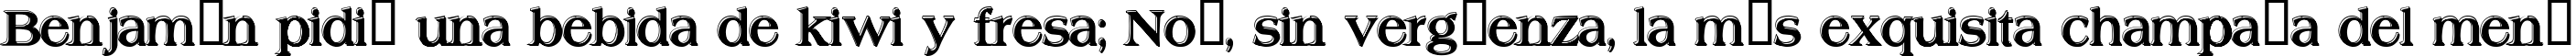 Пример написания шрифтом Offset Plain текста на испанском